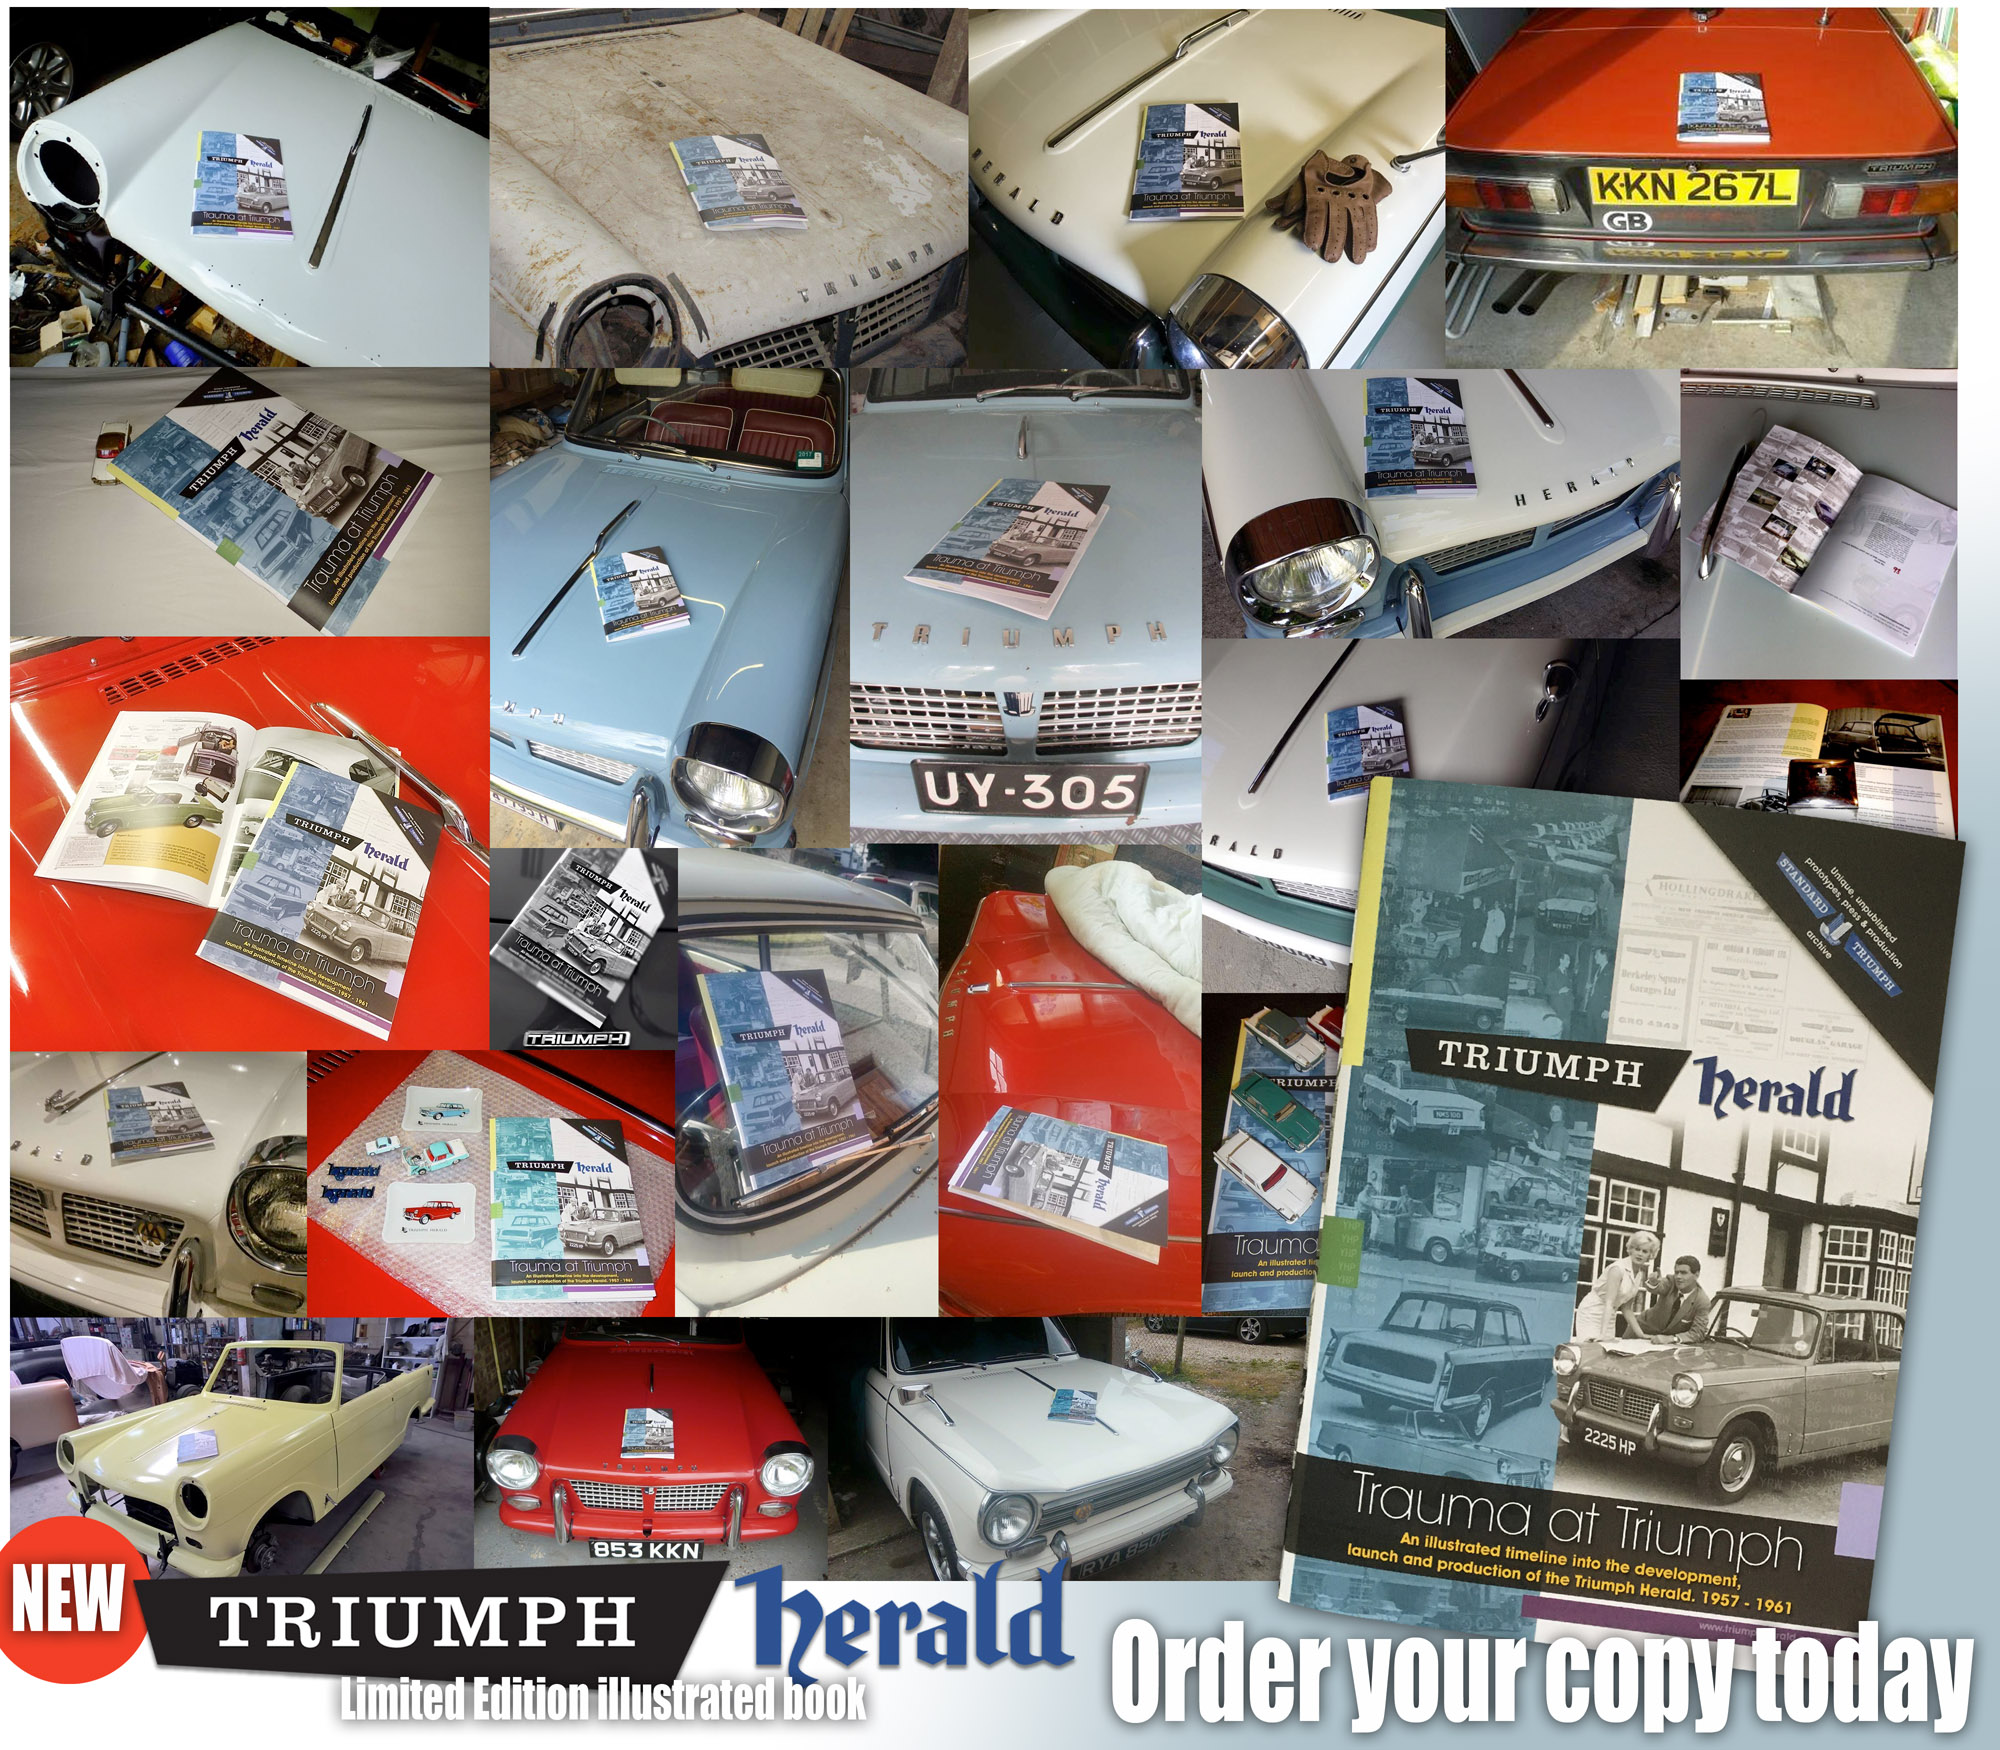 Standard Triumph Herald Limited Edition Book 